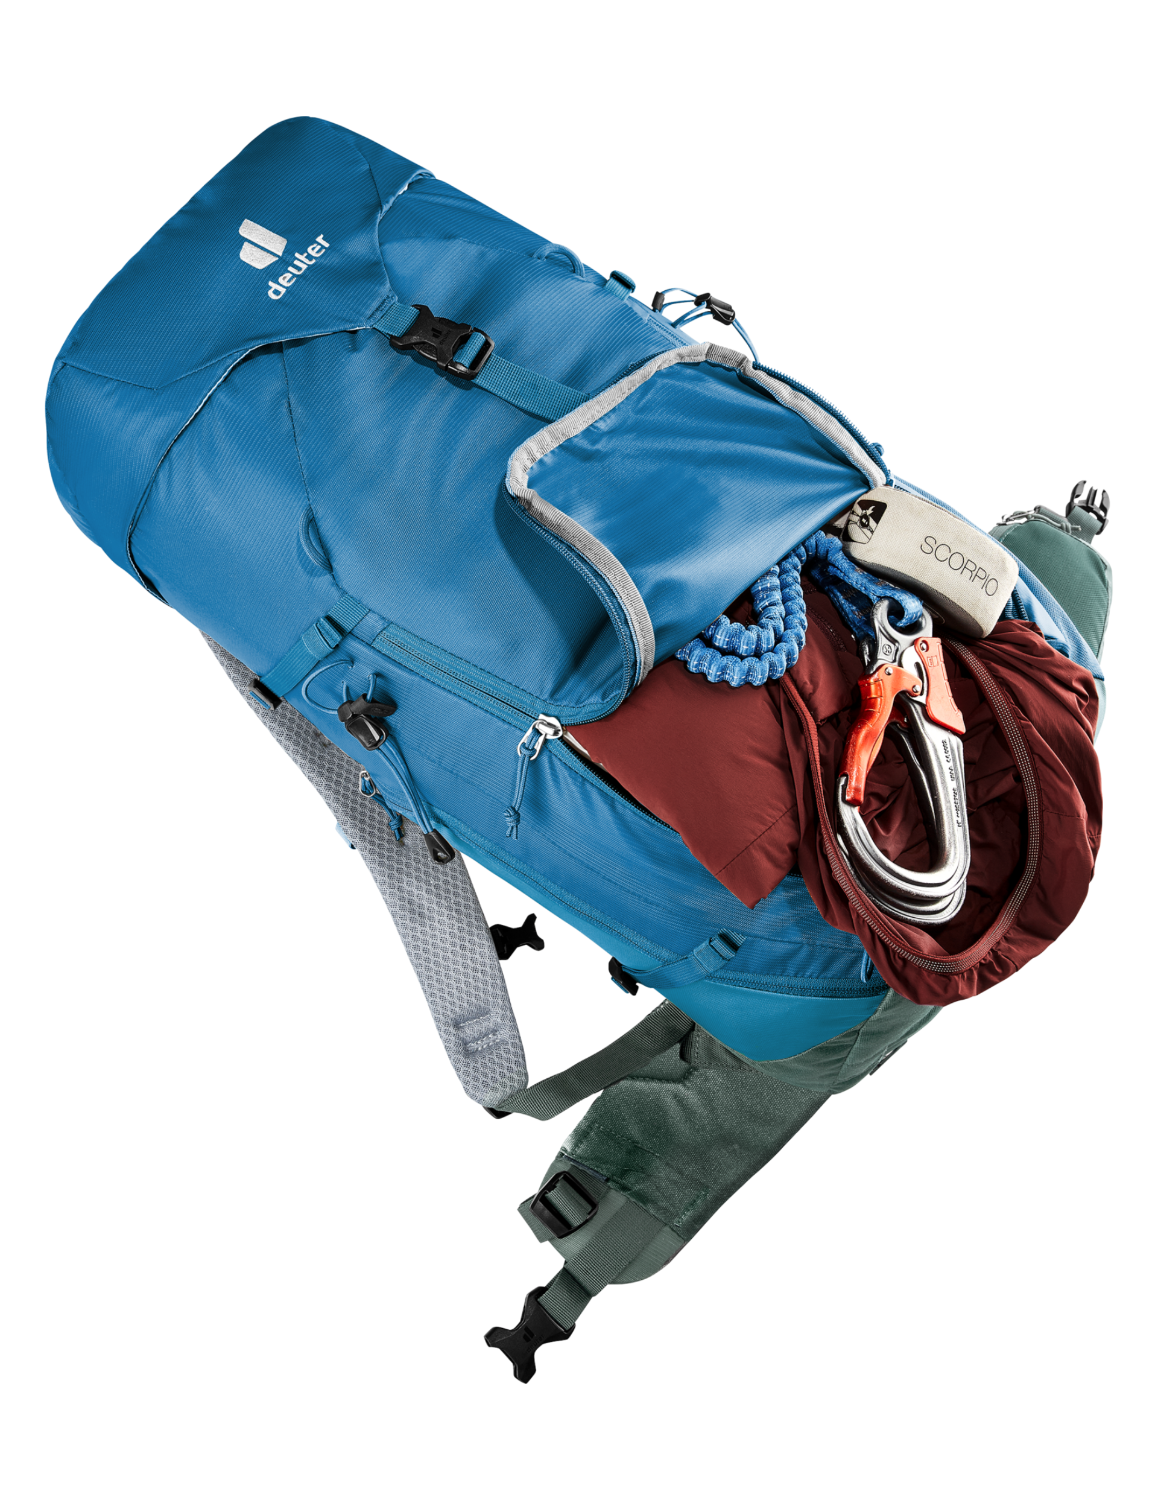 Deuter Trail 30 Men's Hiking Backpack